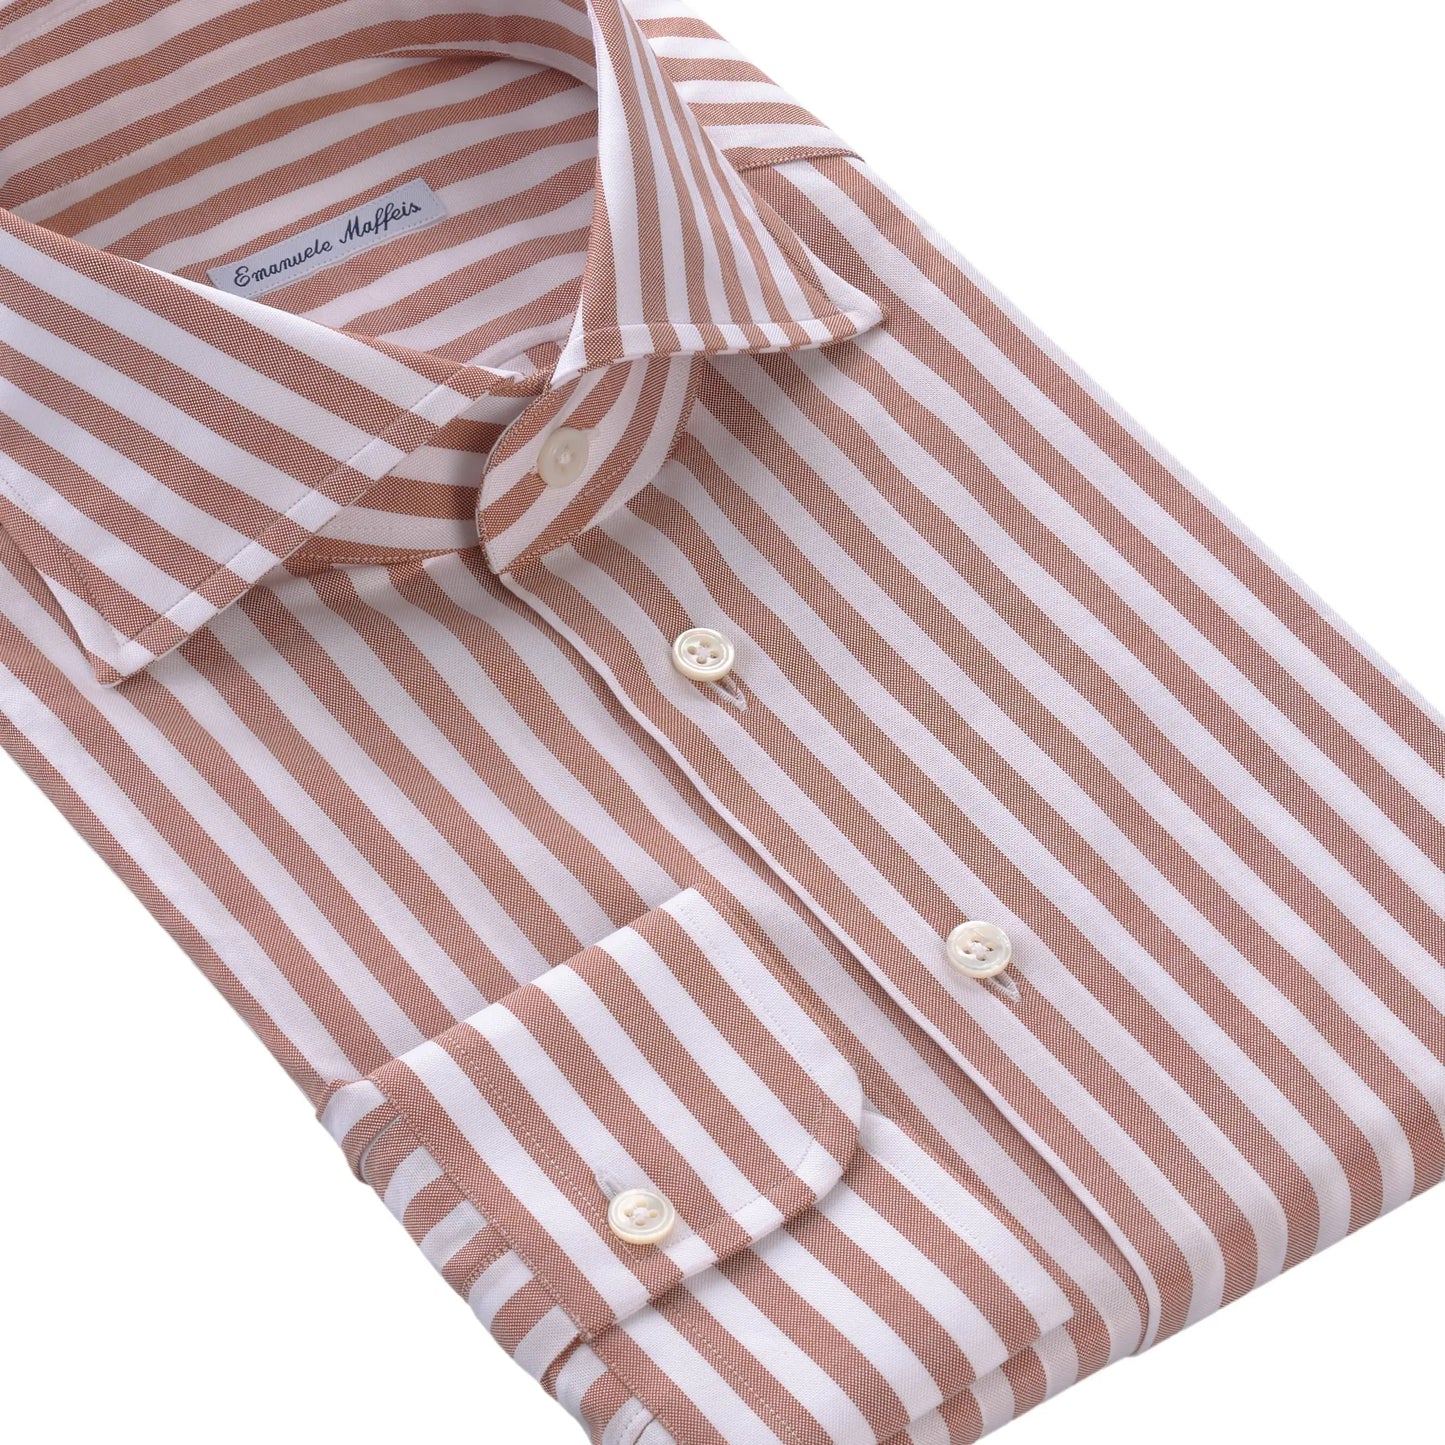 Emanuele Maffeis Cotton Striped Shirt in White and Peach Orange - SARTALE